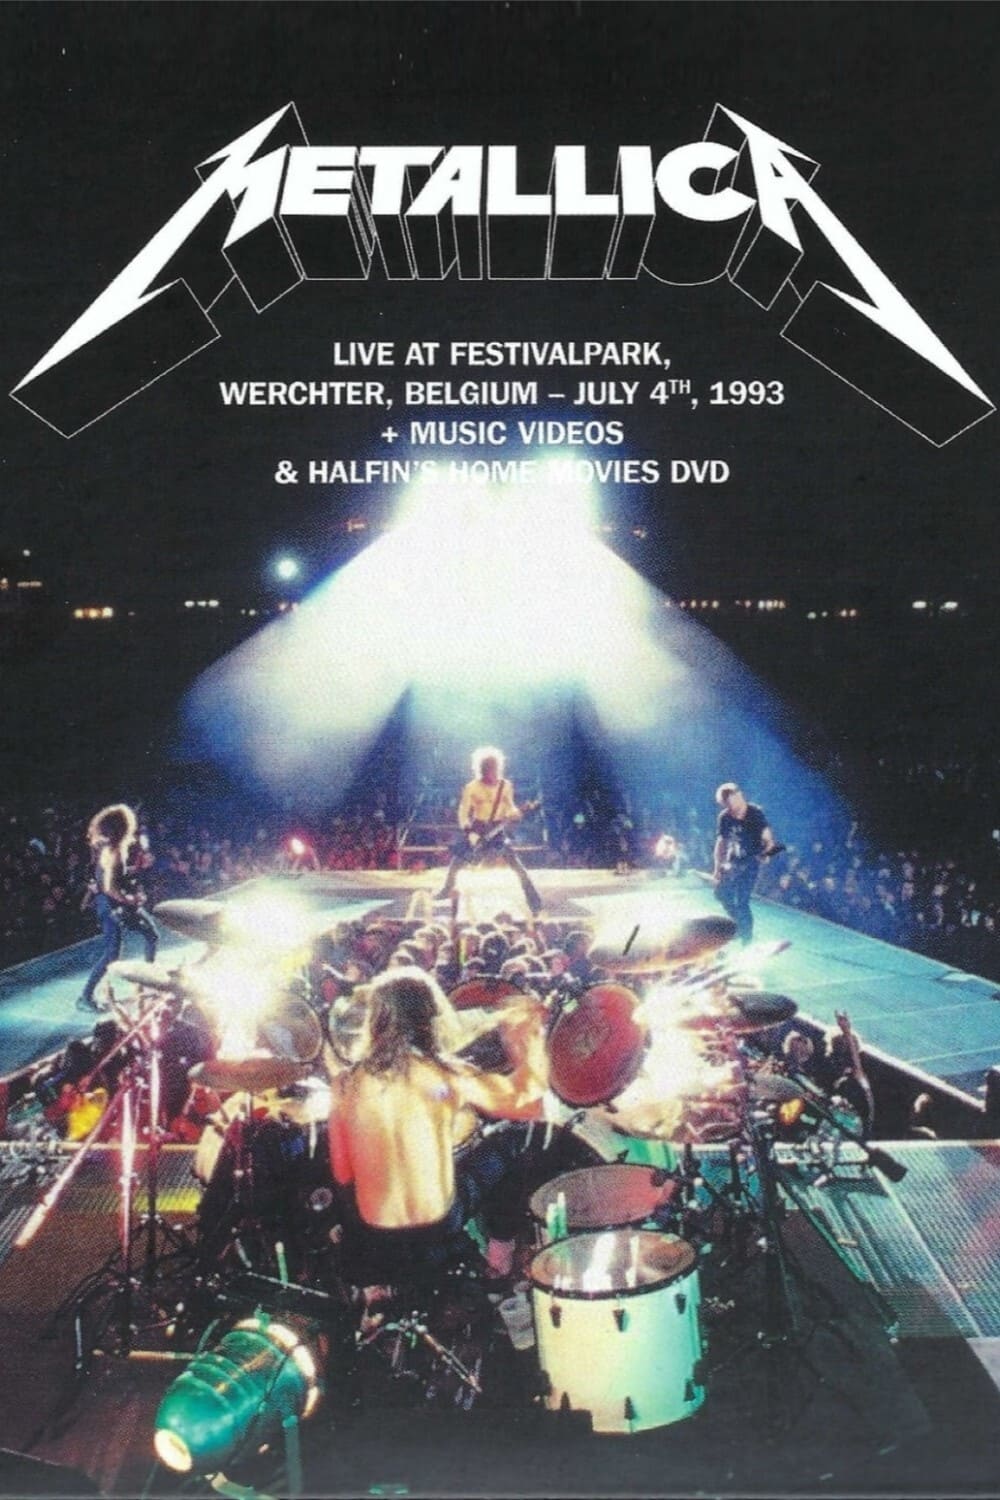 Metallica - Live At Festivalpark, Werchter, Belgium - July 4th, 1993